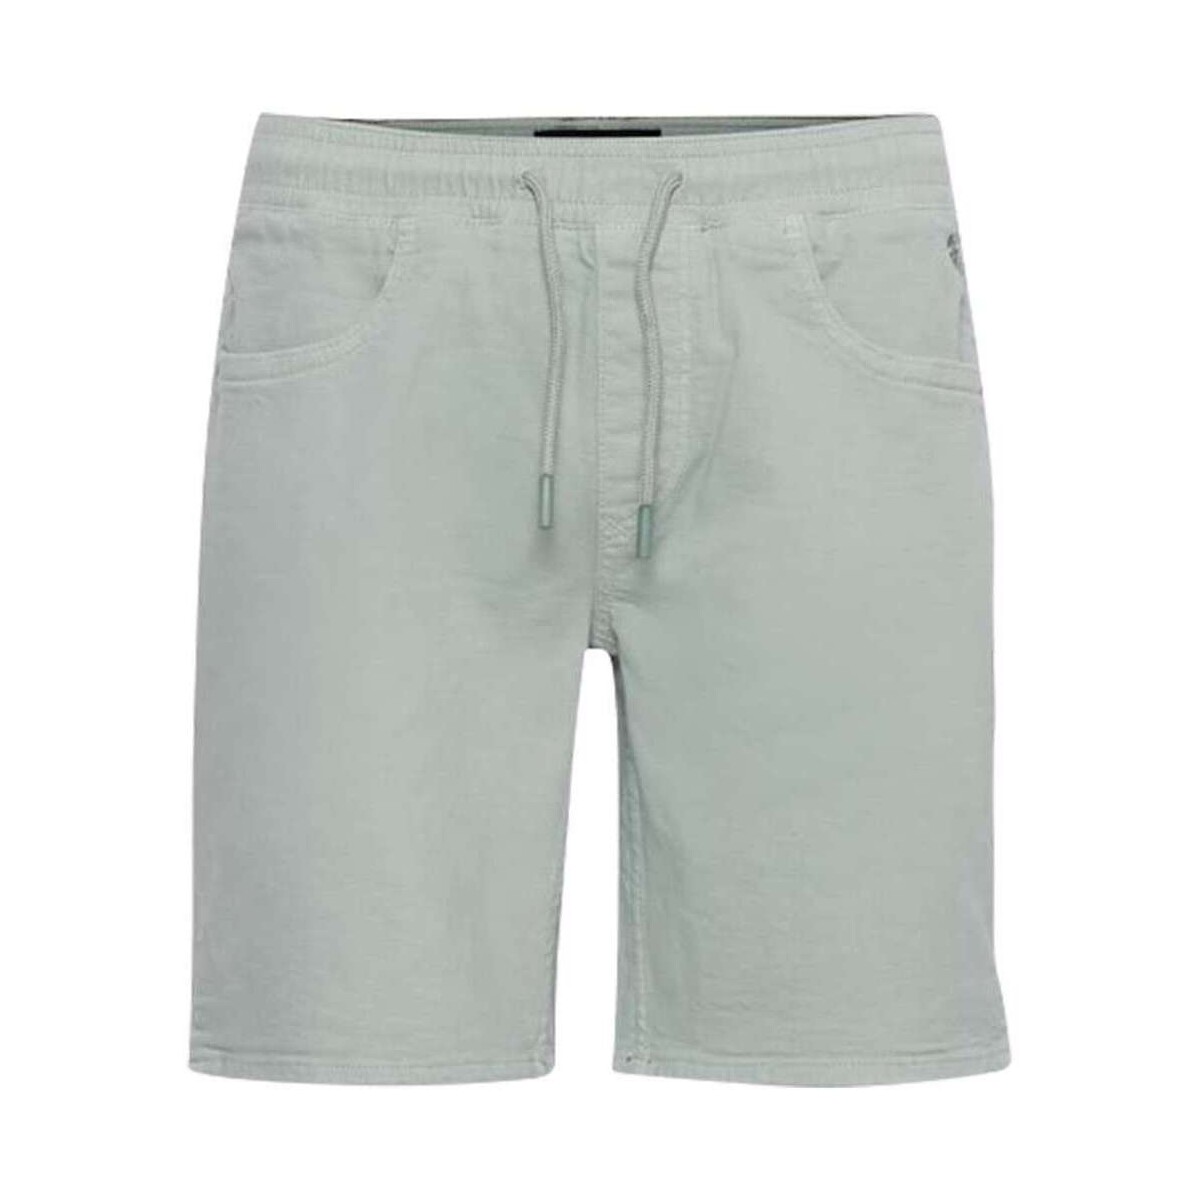 Vêtements Homme Shorts / Bermudas Blend Of America 145641VTPE23 Vert